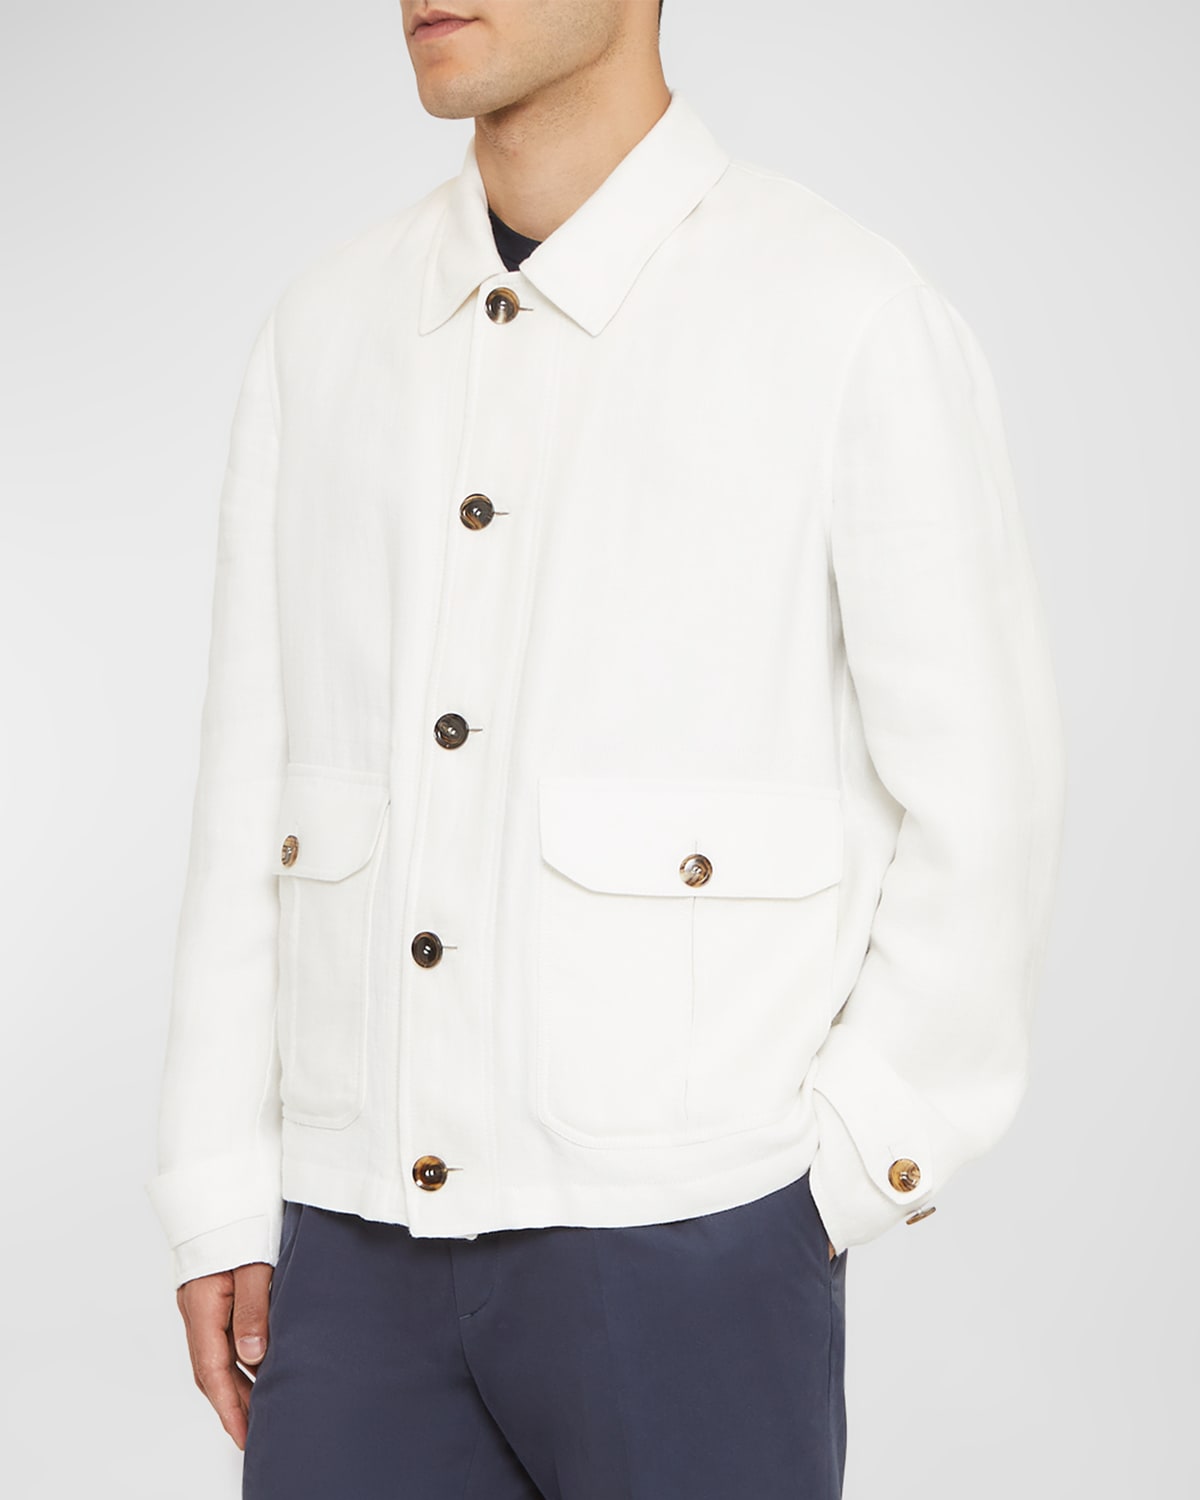 Men's Button-Down Blouson Jacket